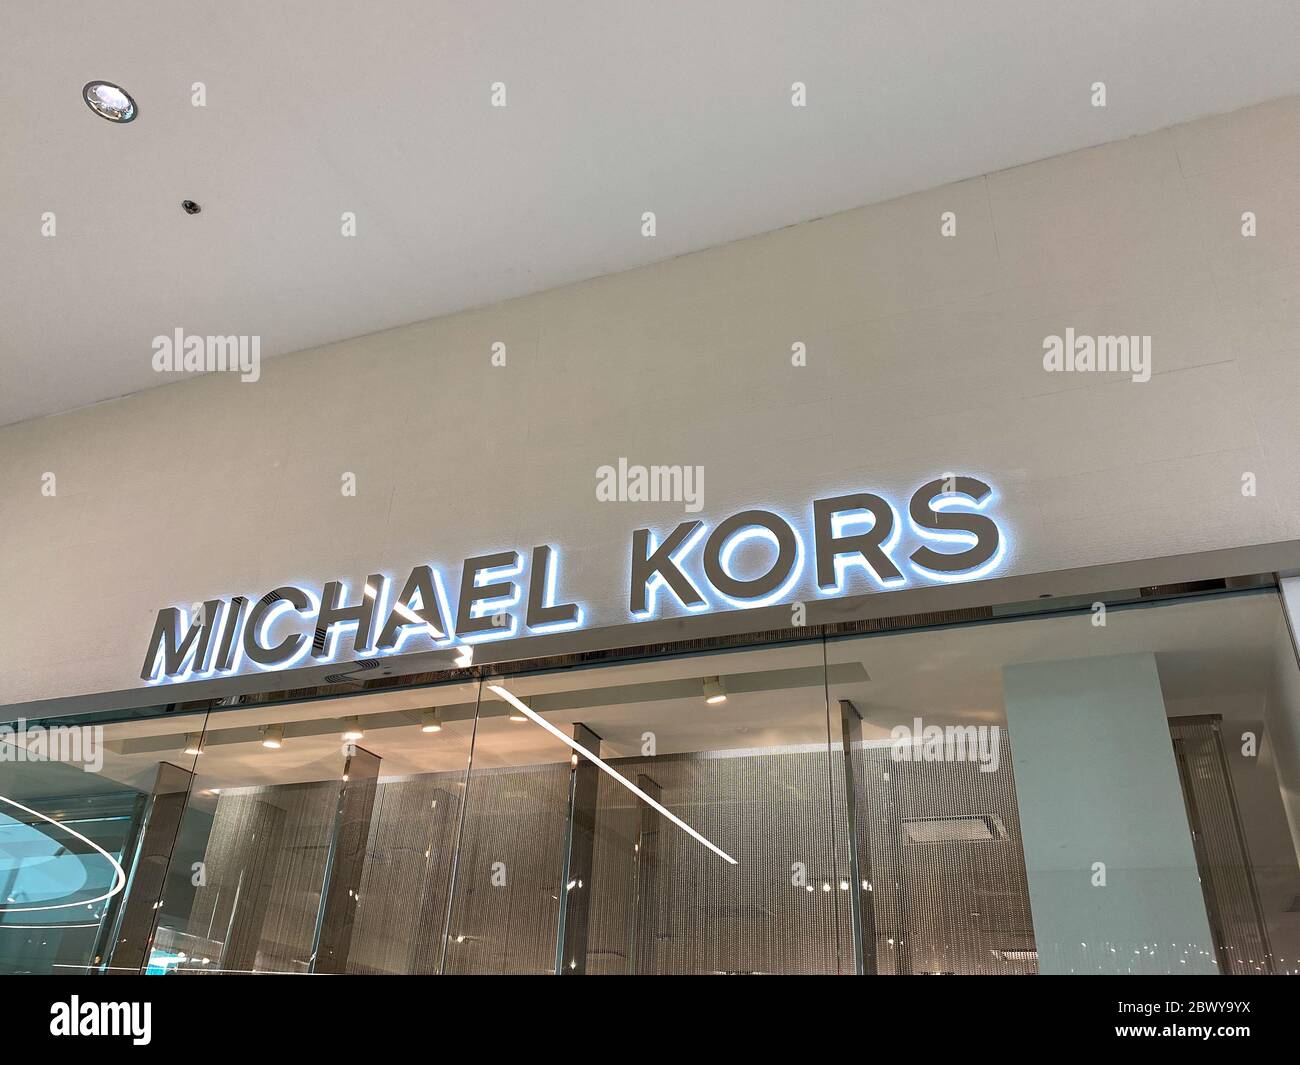 Orlando,FL/USA-2/17/20: The Michael Kors  storefront at the MIllenia Mall in Orlando, Florida. Stock Photo